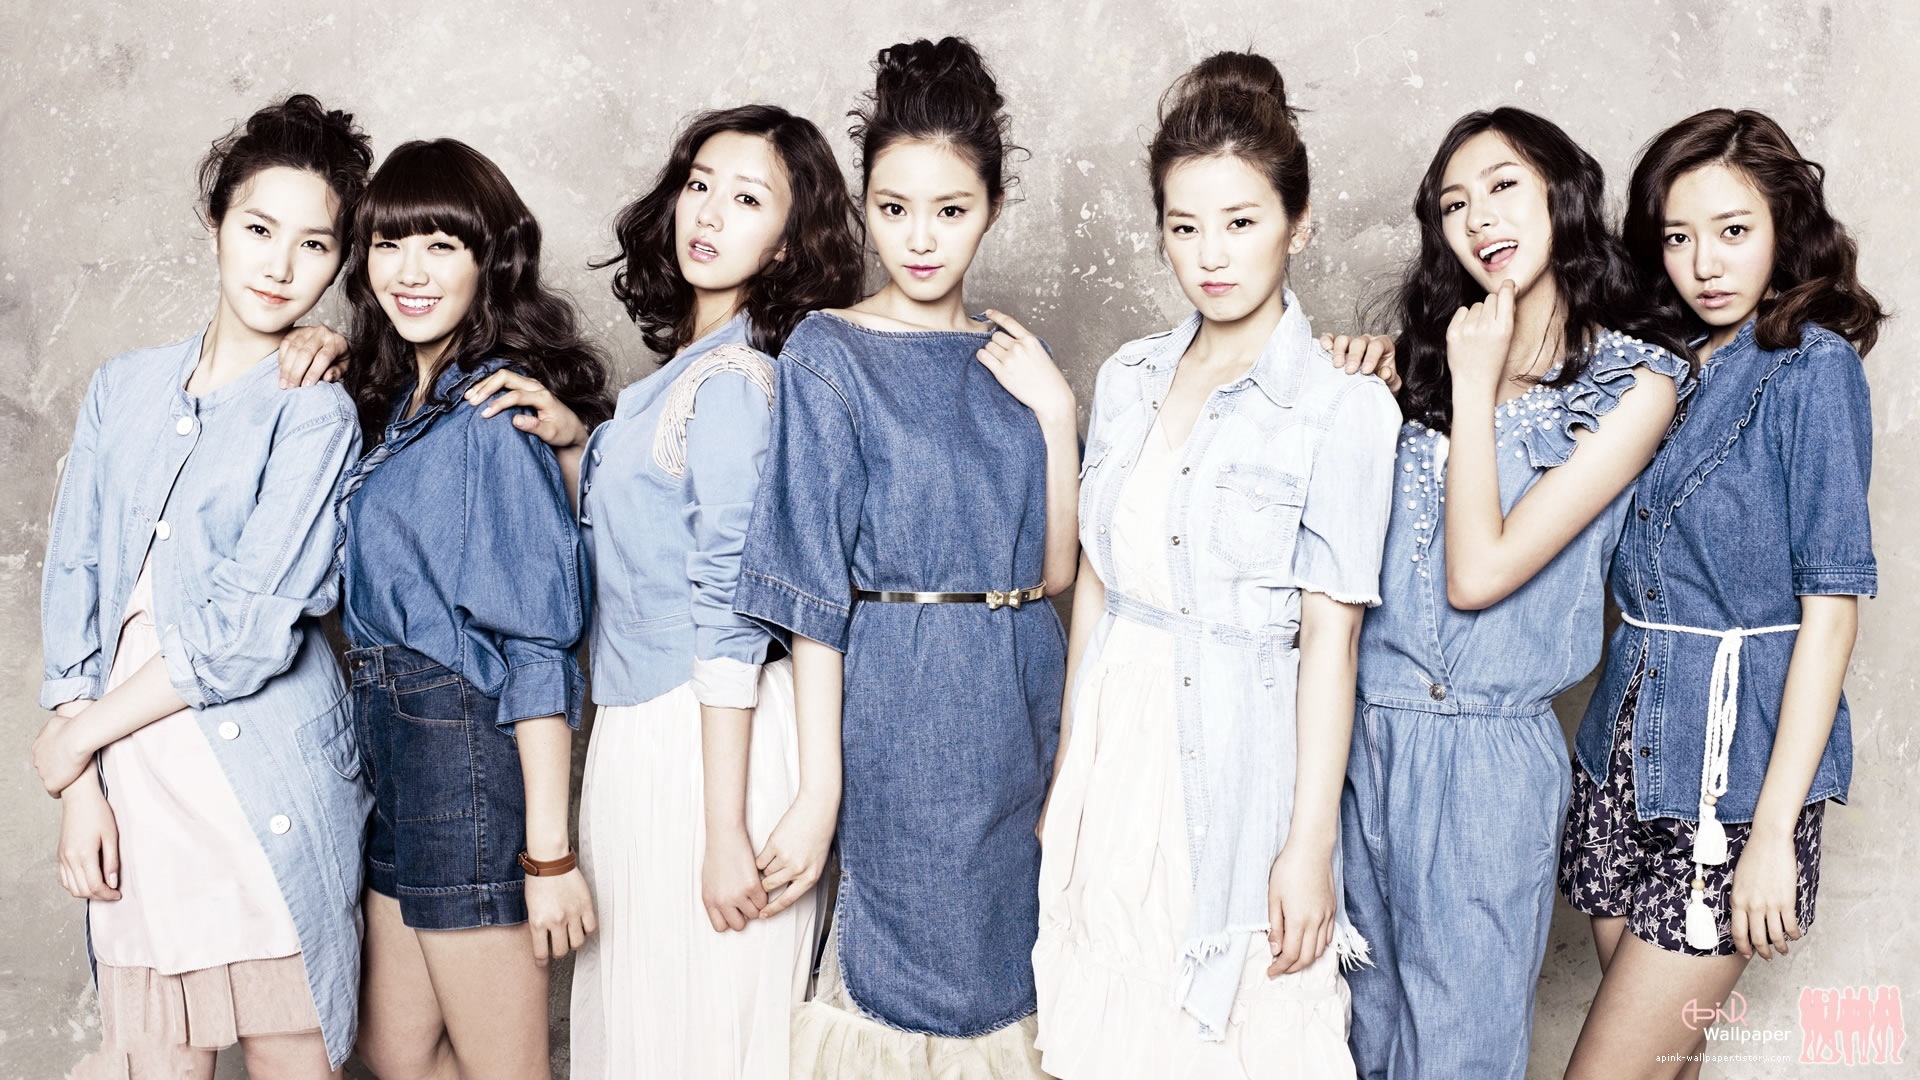 Korean music girl group, A Pink HD wallpapers #14 - 1920x1080